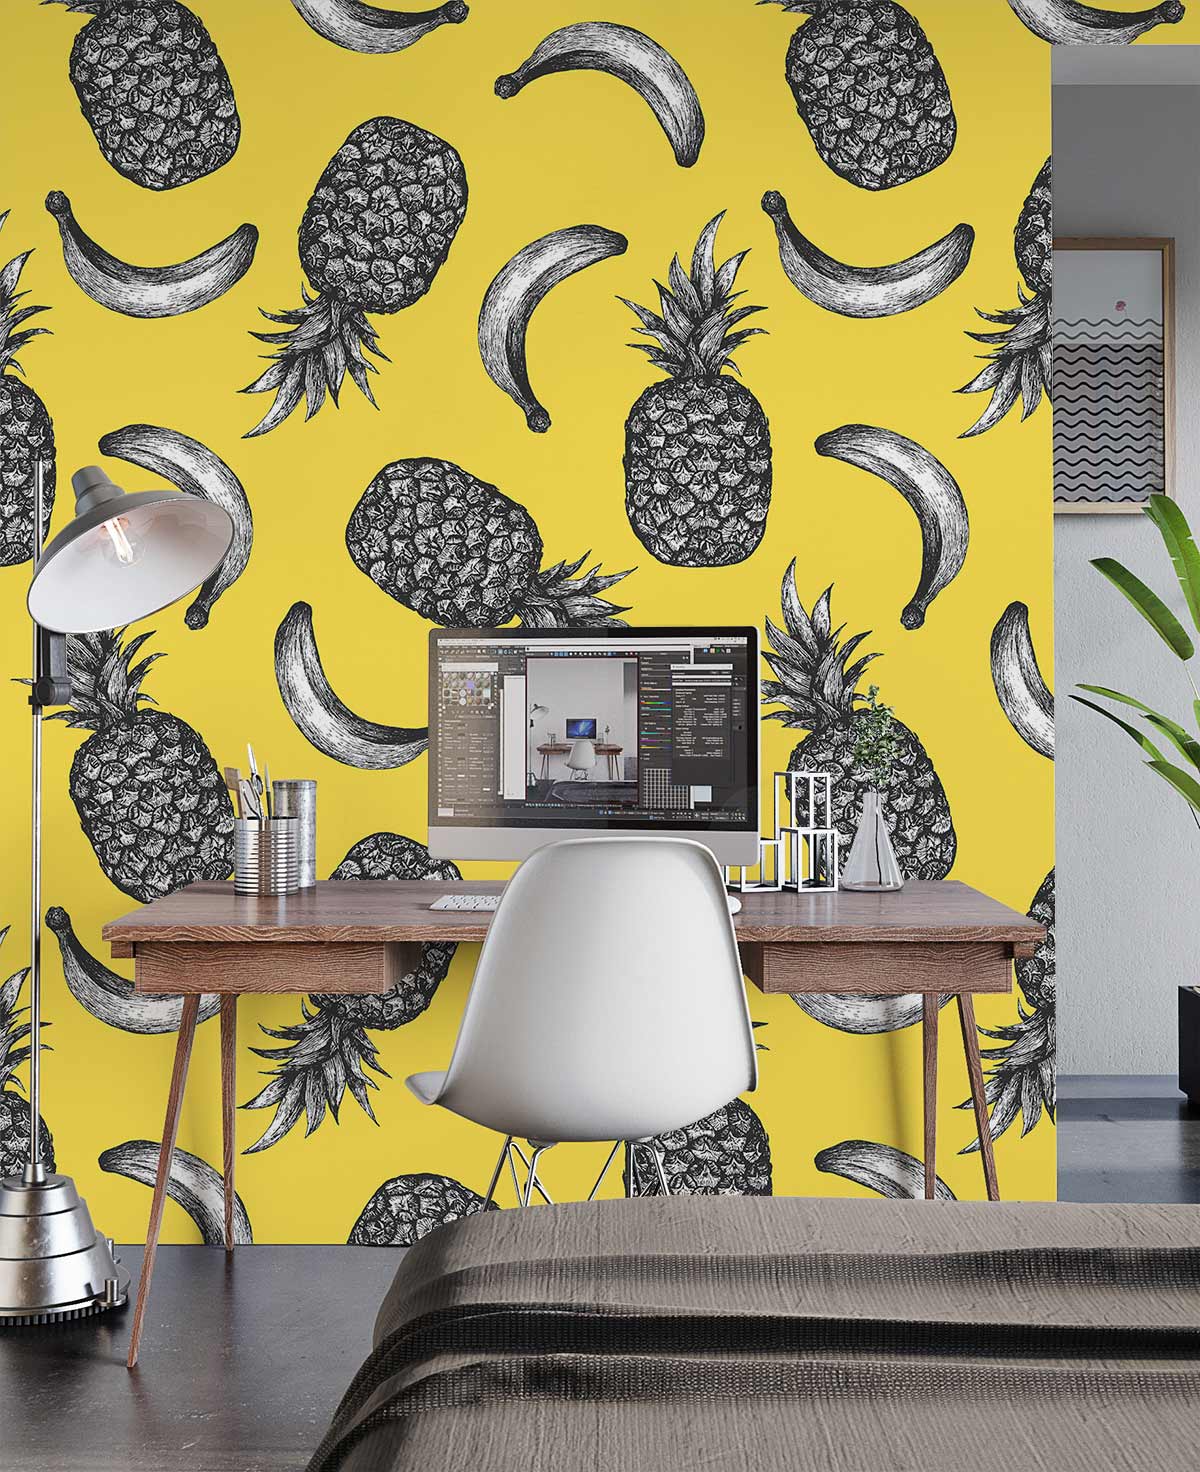 sketched Banana & Pineapple fruit Wallpaper Mural for office design